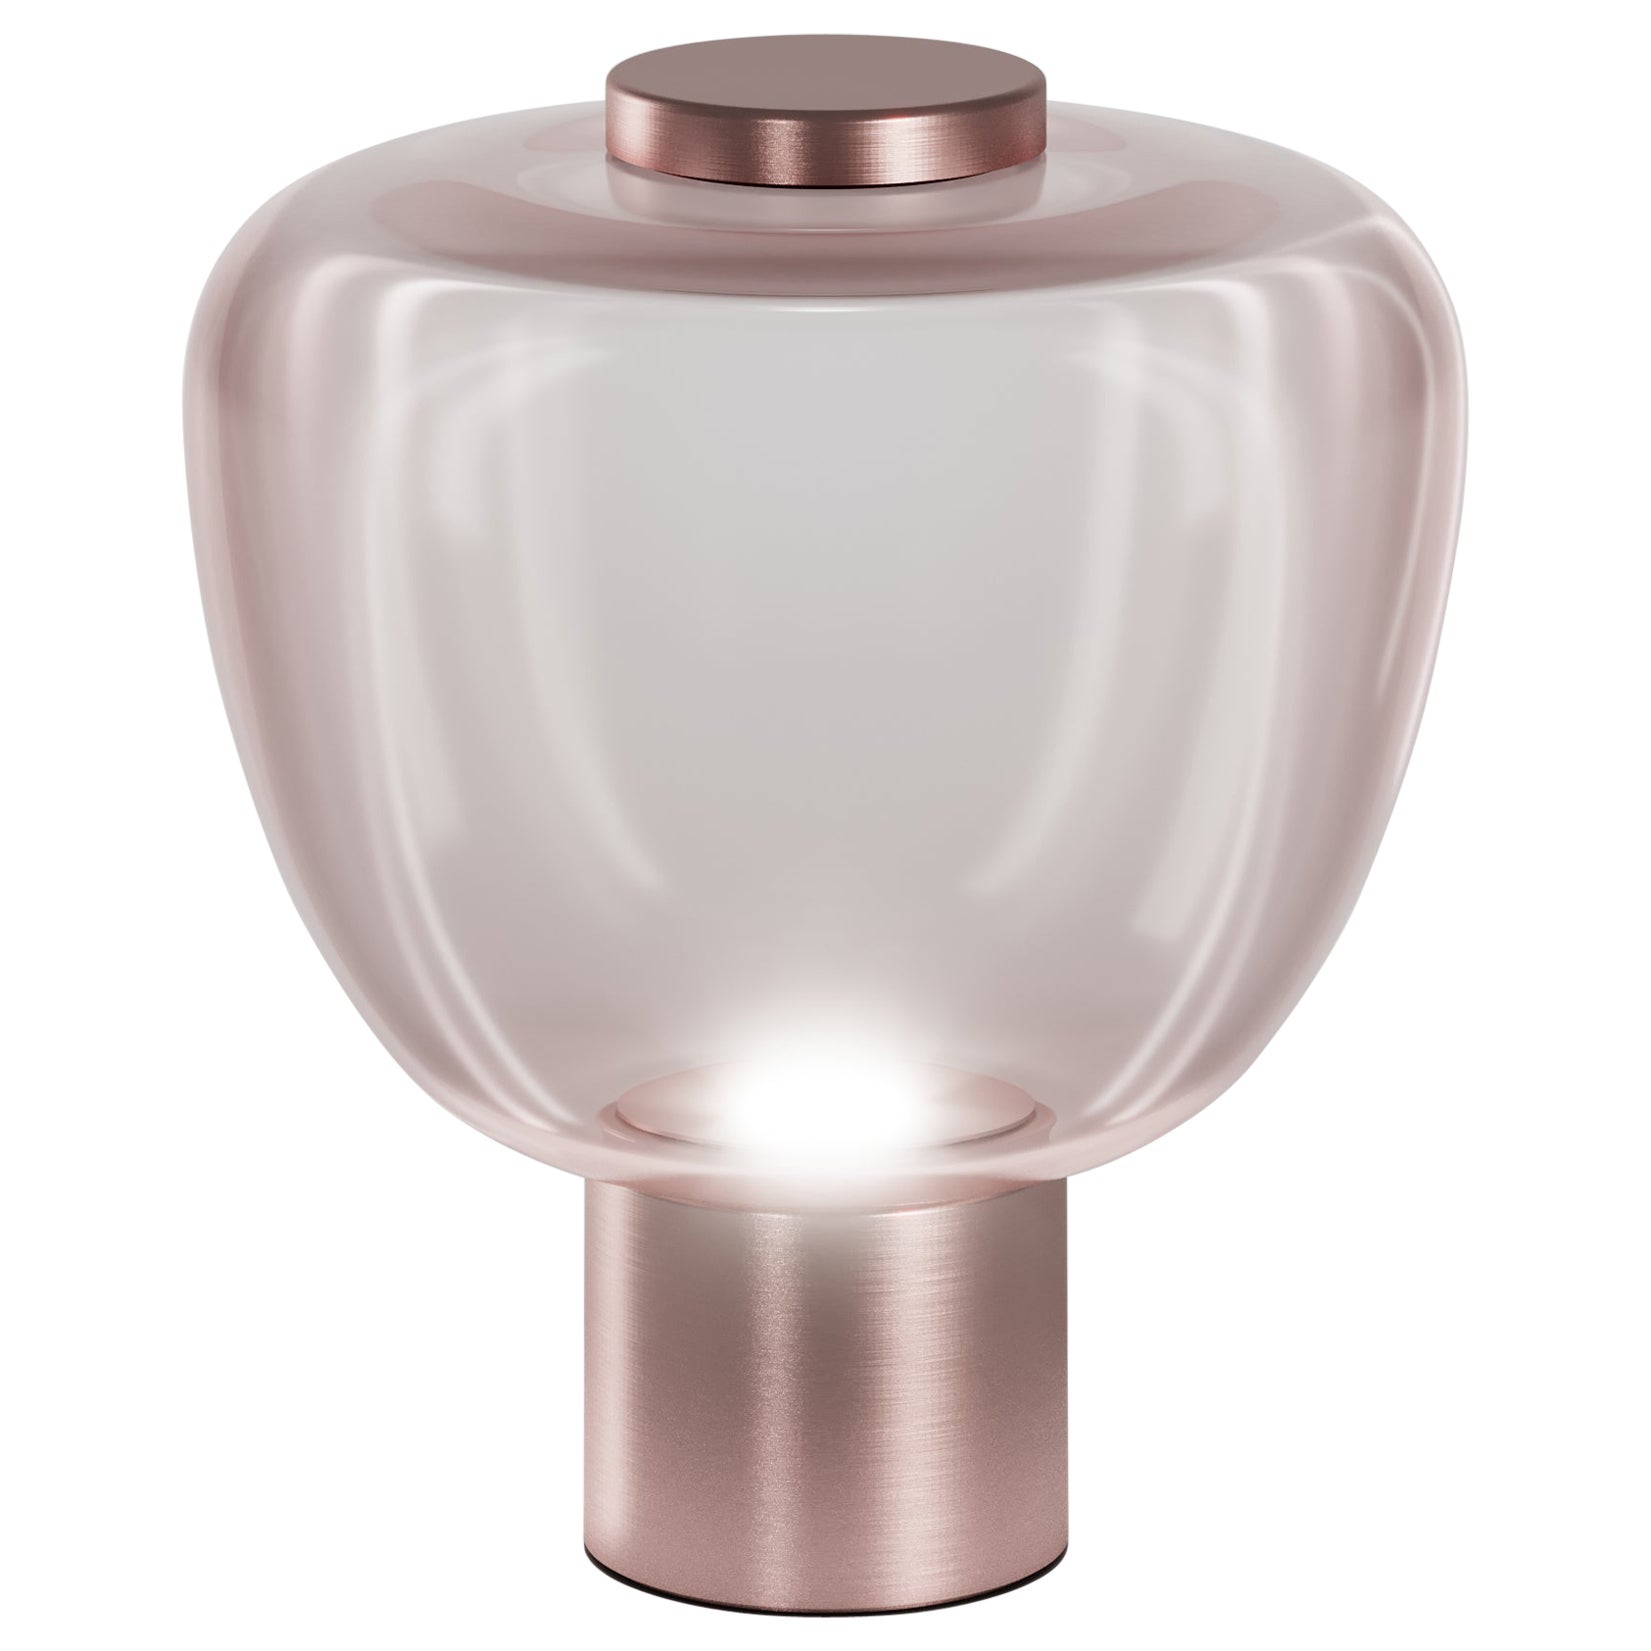 Vistosi Riflesso Table Lamp in Light Amethyst Transaprent Glass And Copper Frame For Sale